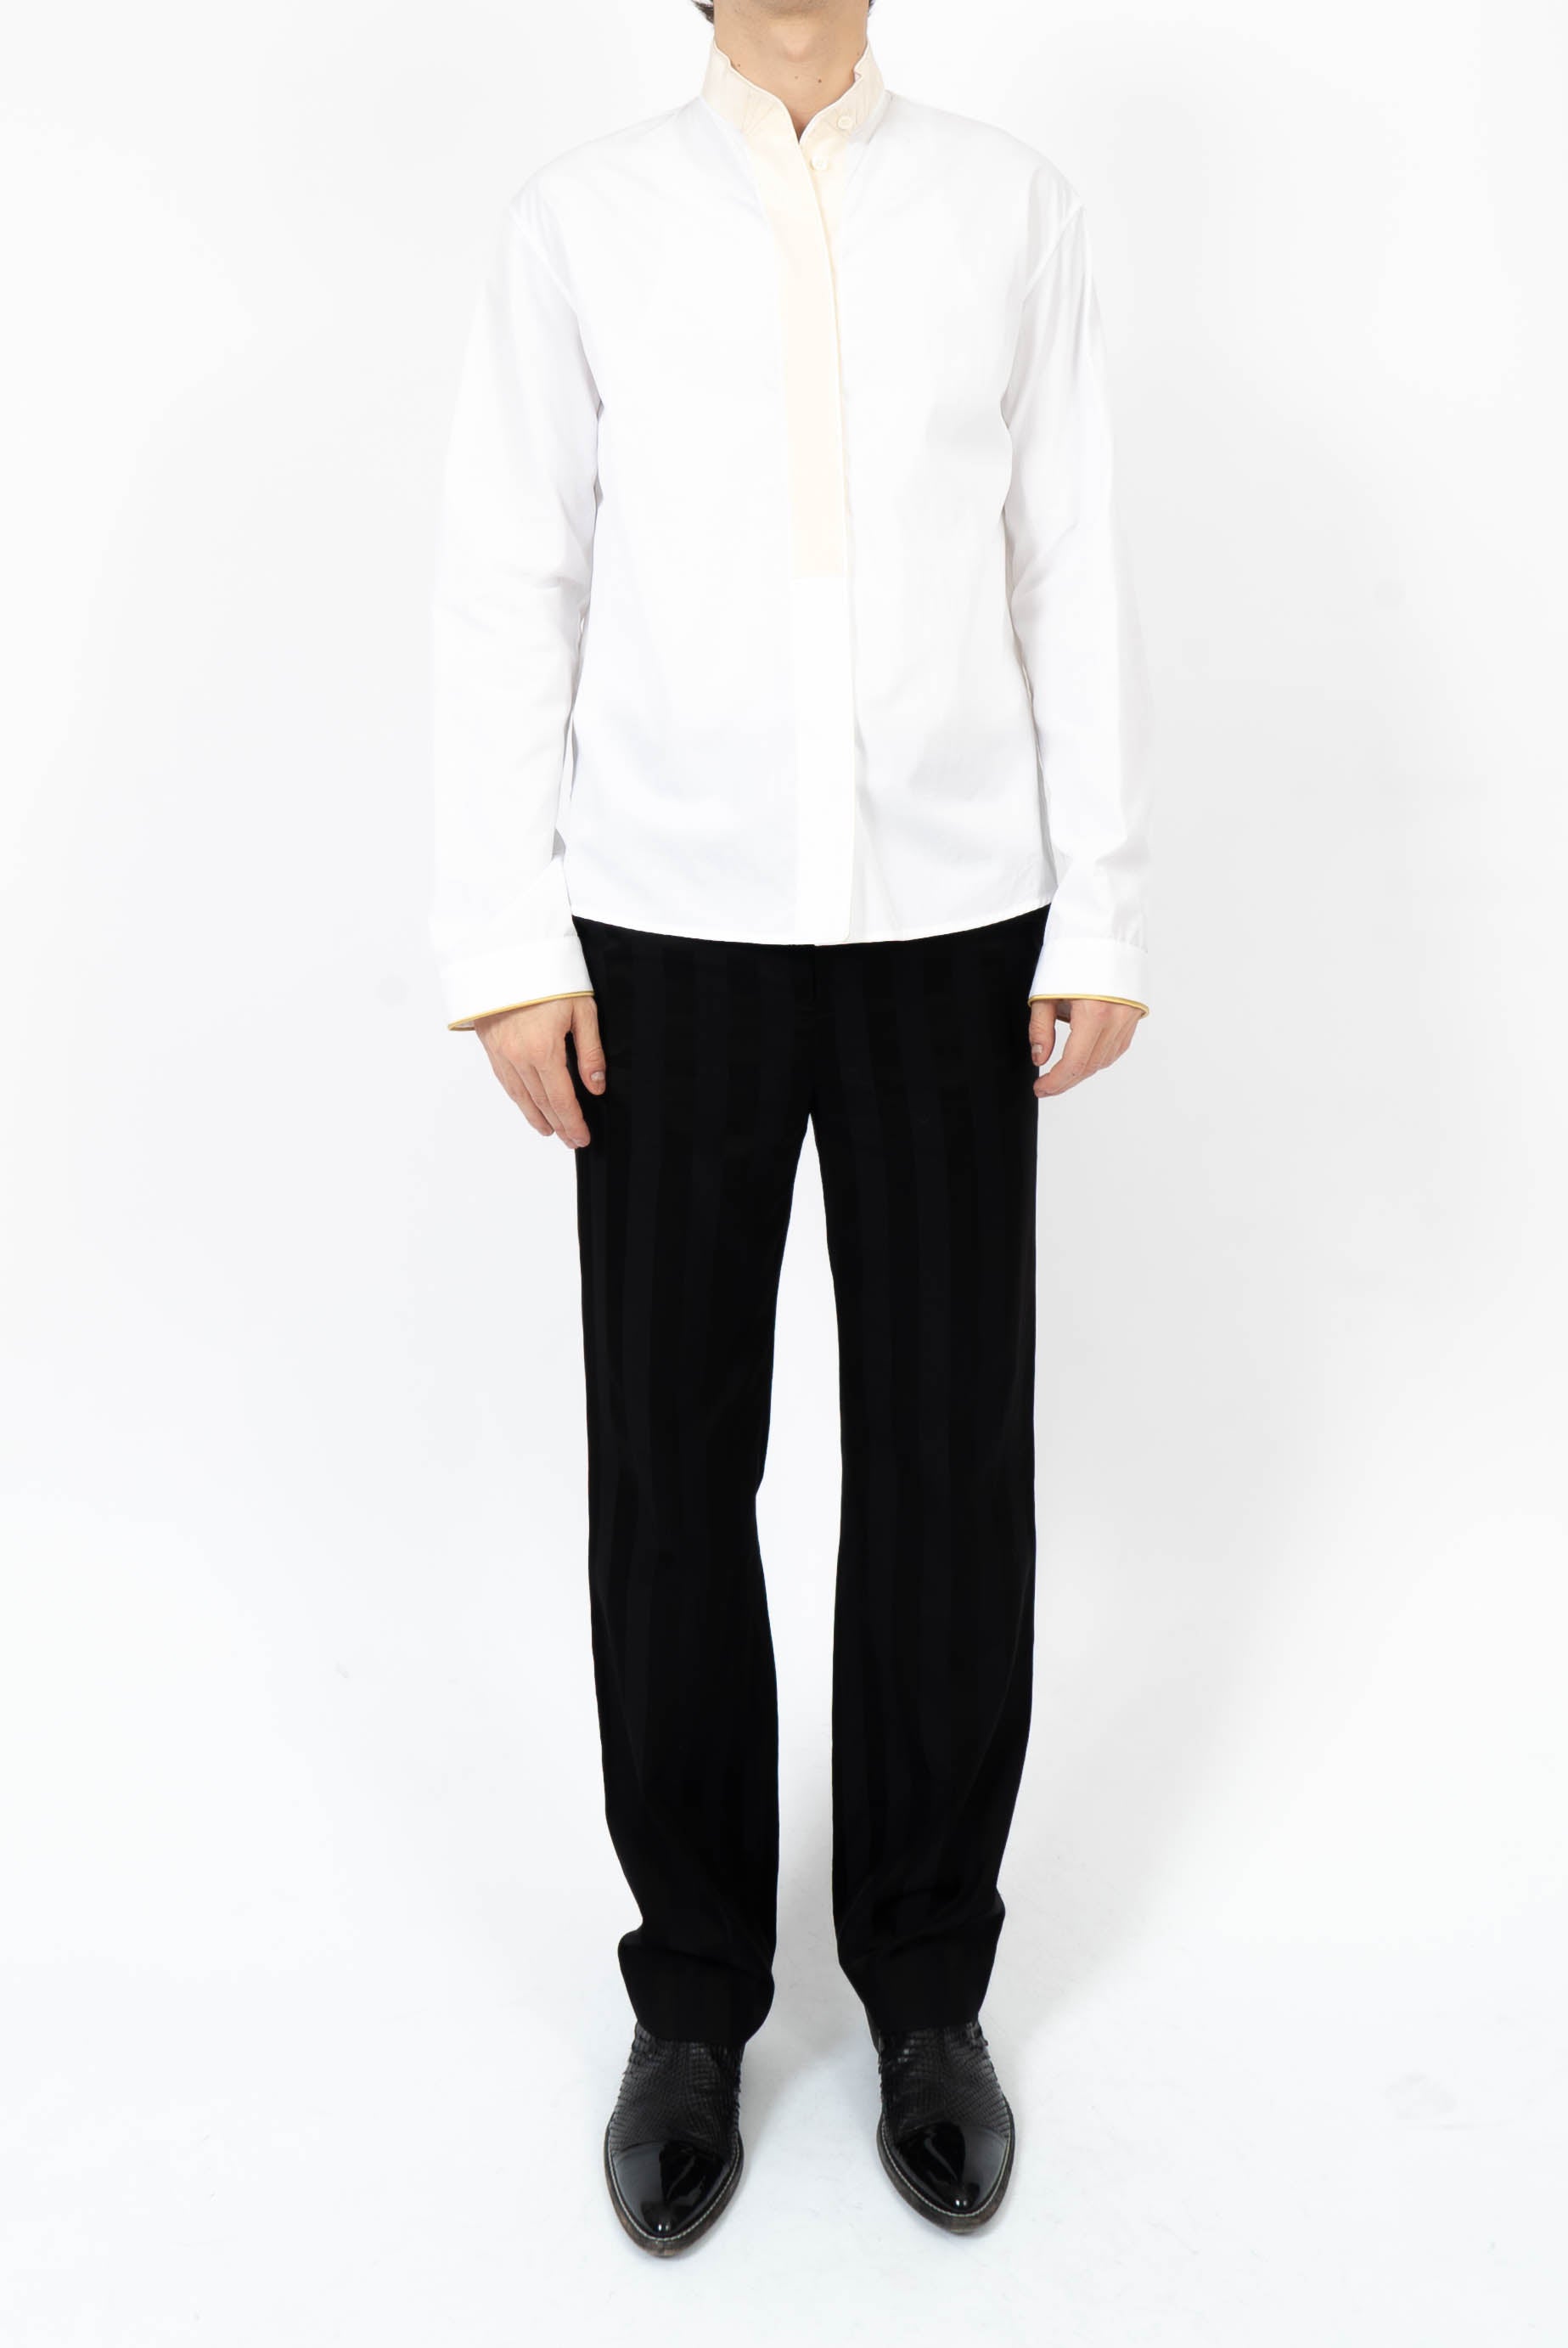 FW18 White Cotton Shirt with Crossgrain